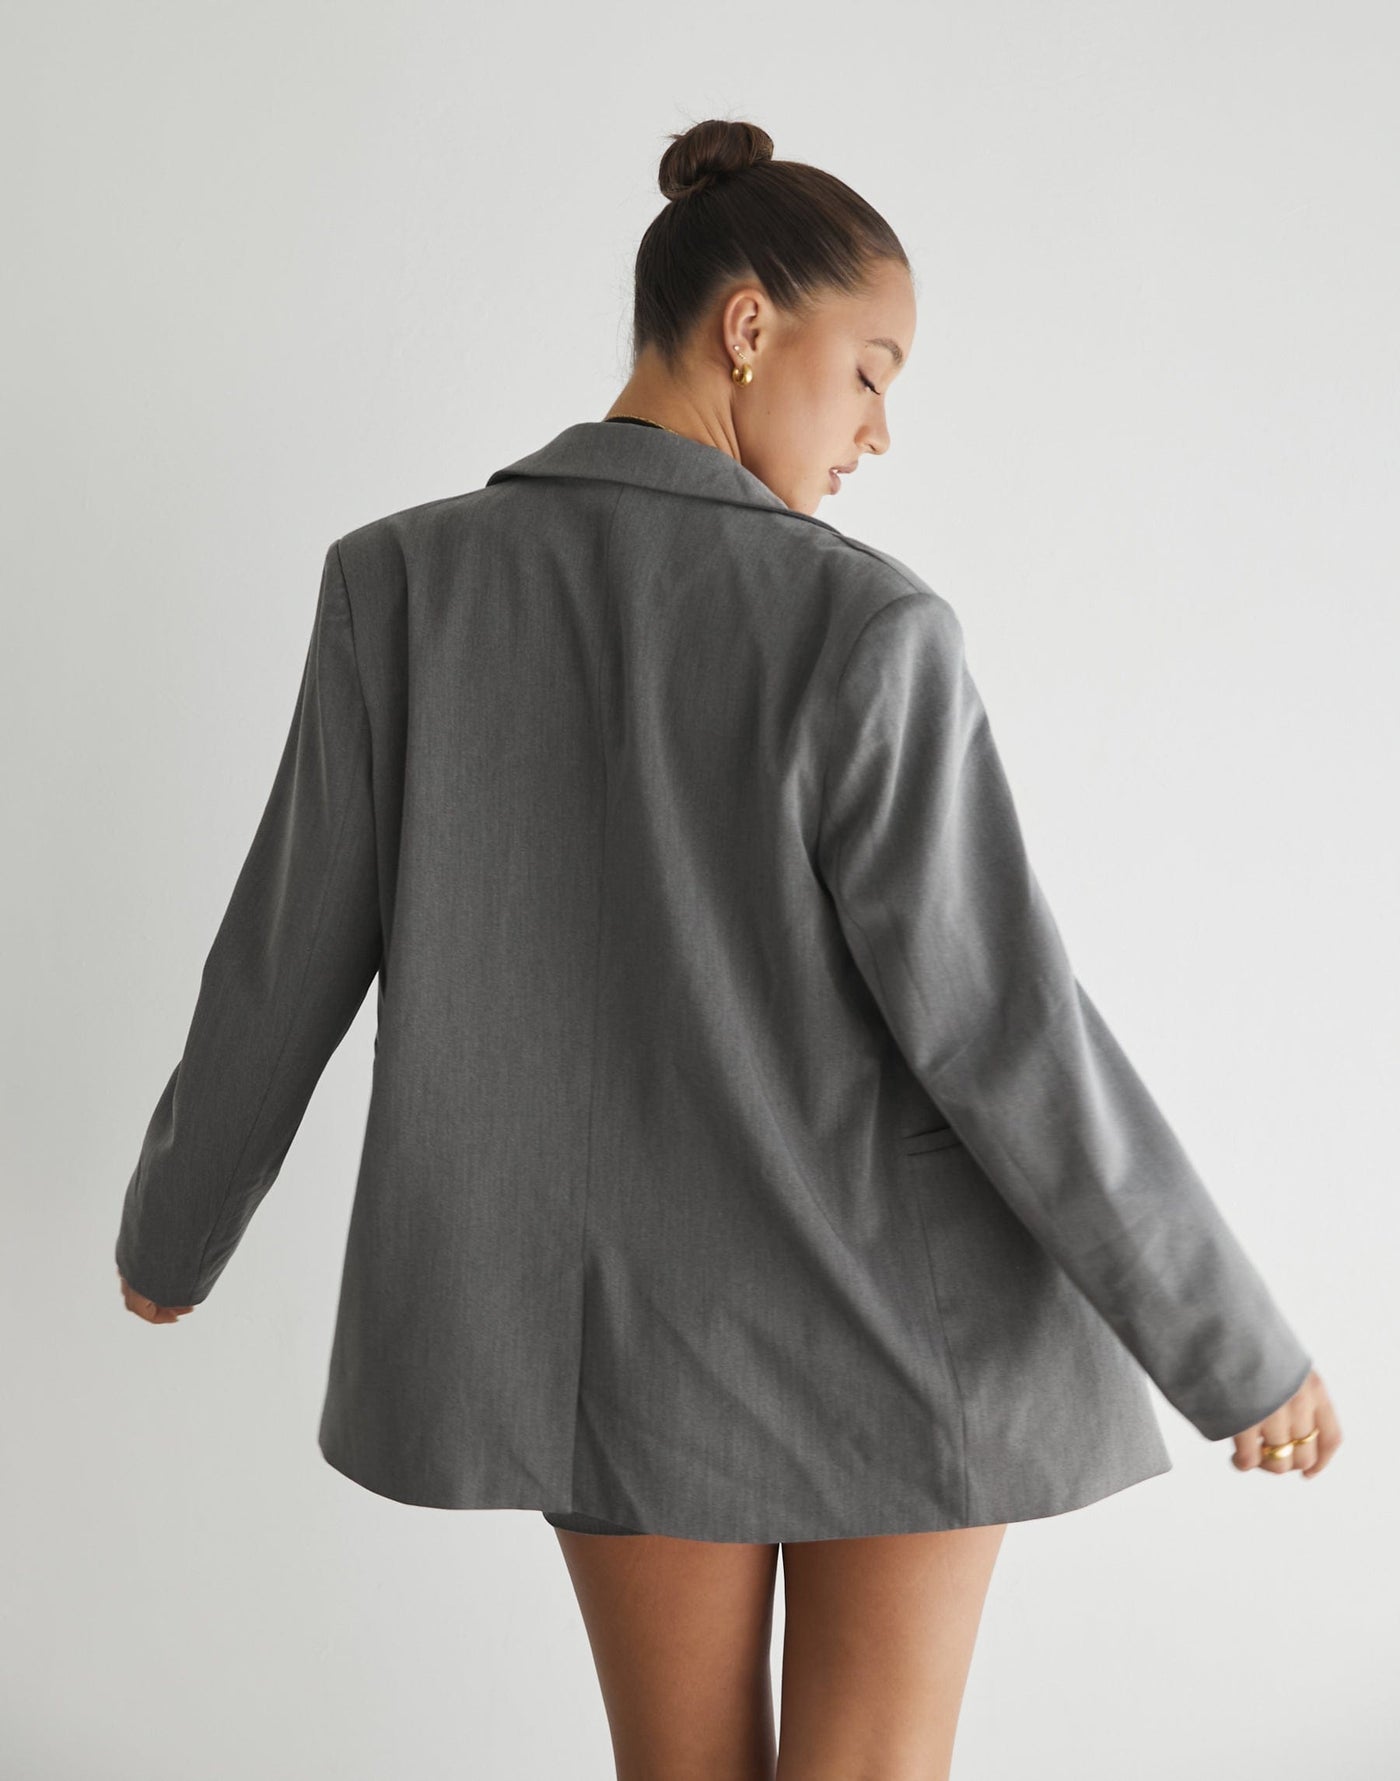 Ashwood Blazer (Grey) - Grey Blazer - Women's Outerwear - Charcoal Clothing